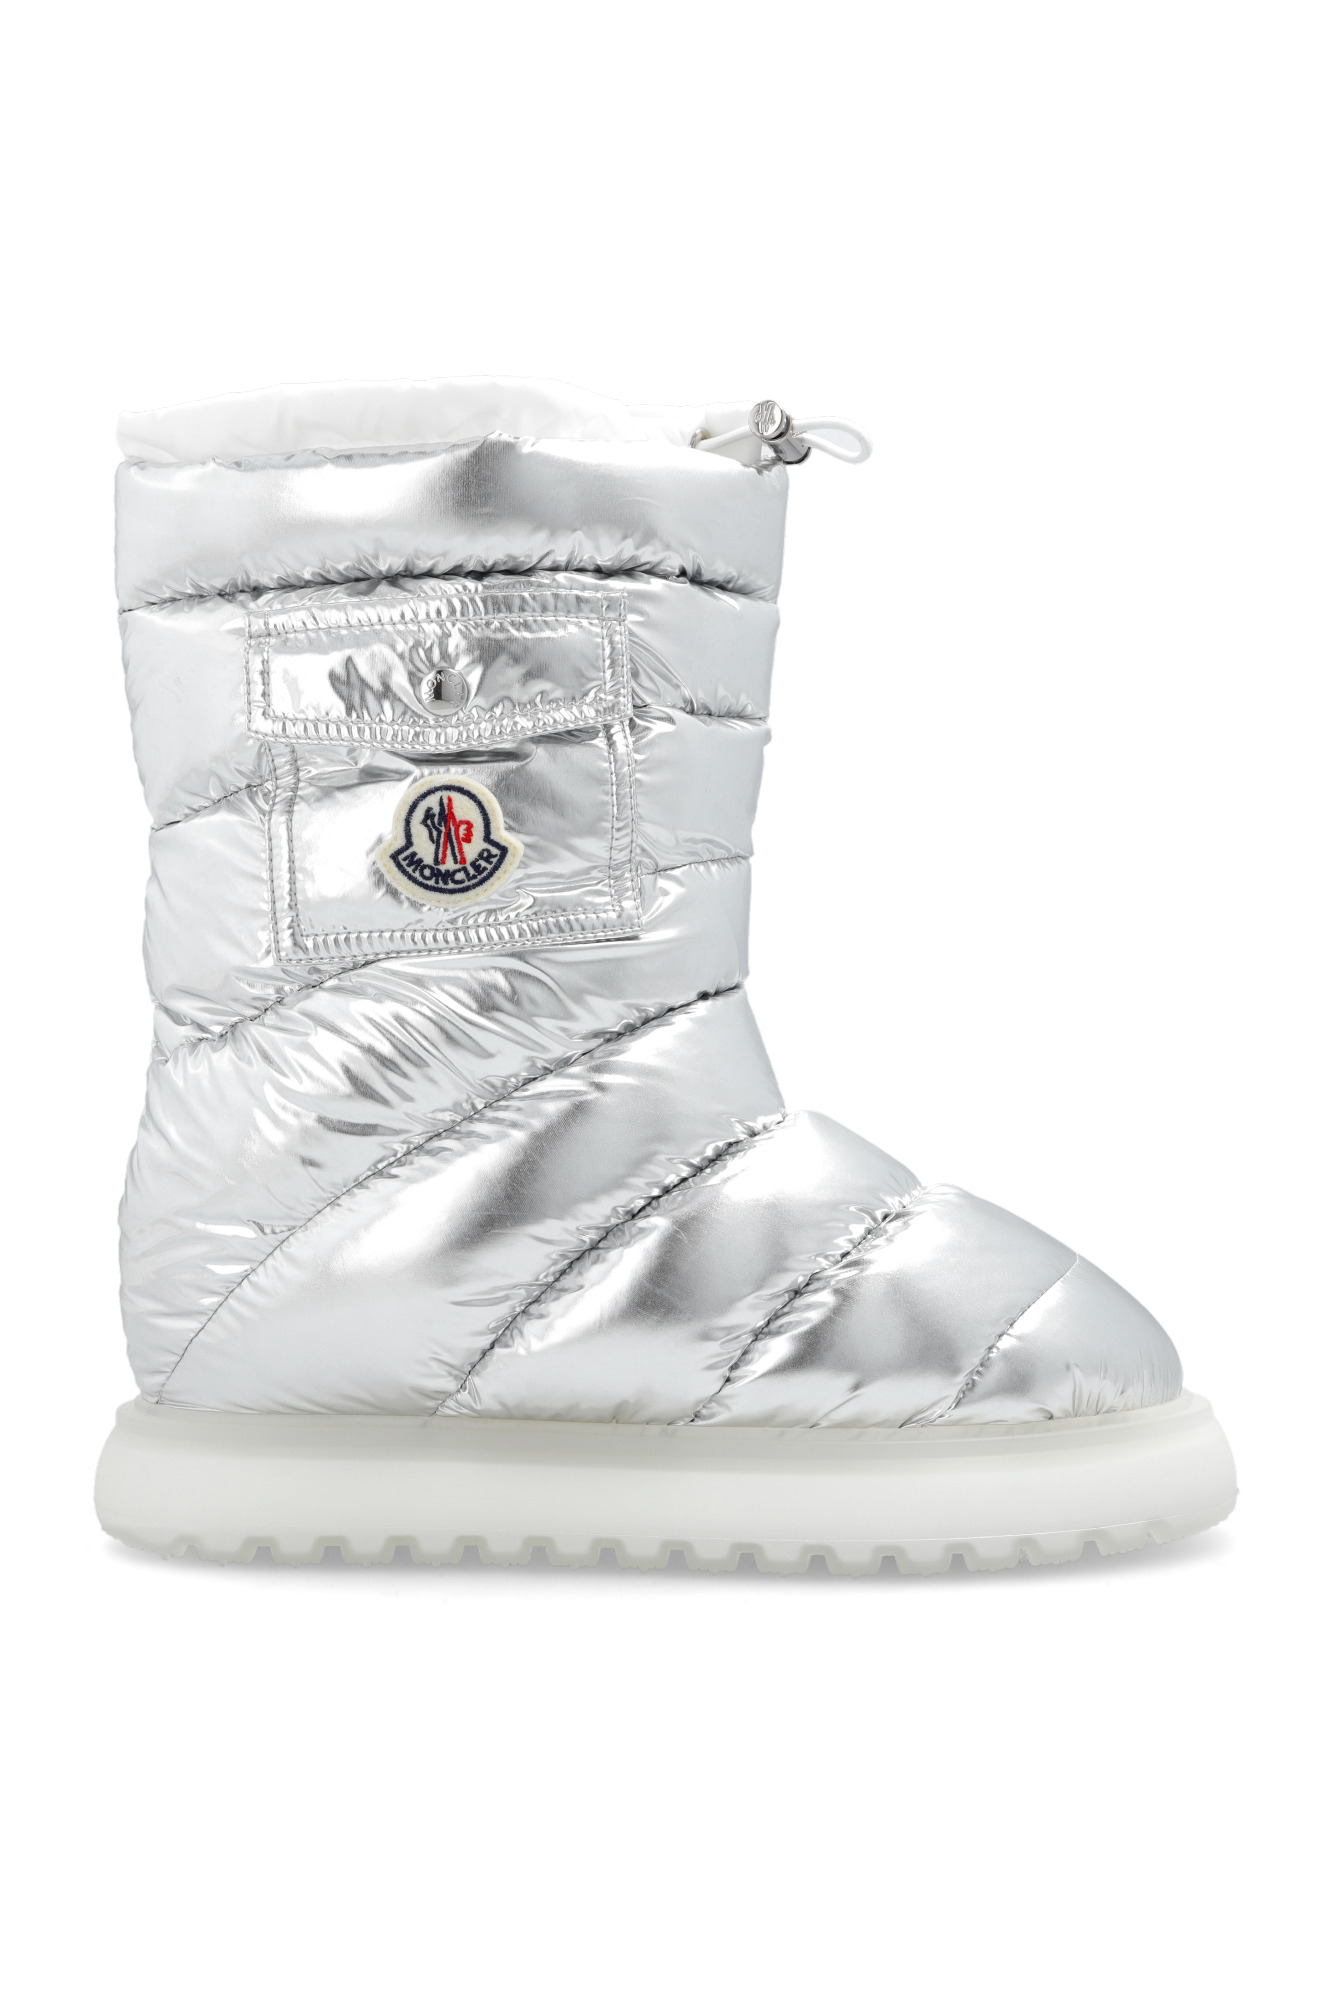 Moncler ‘Gaia’ snow boots